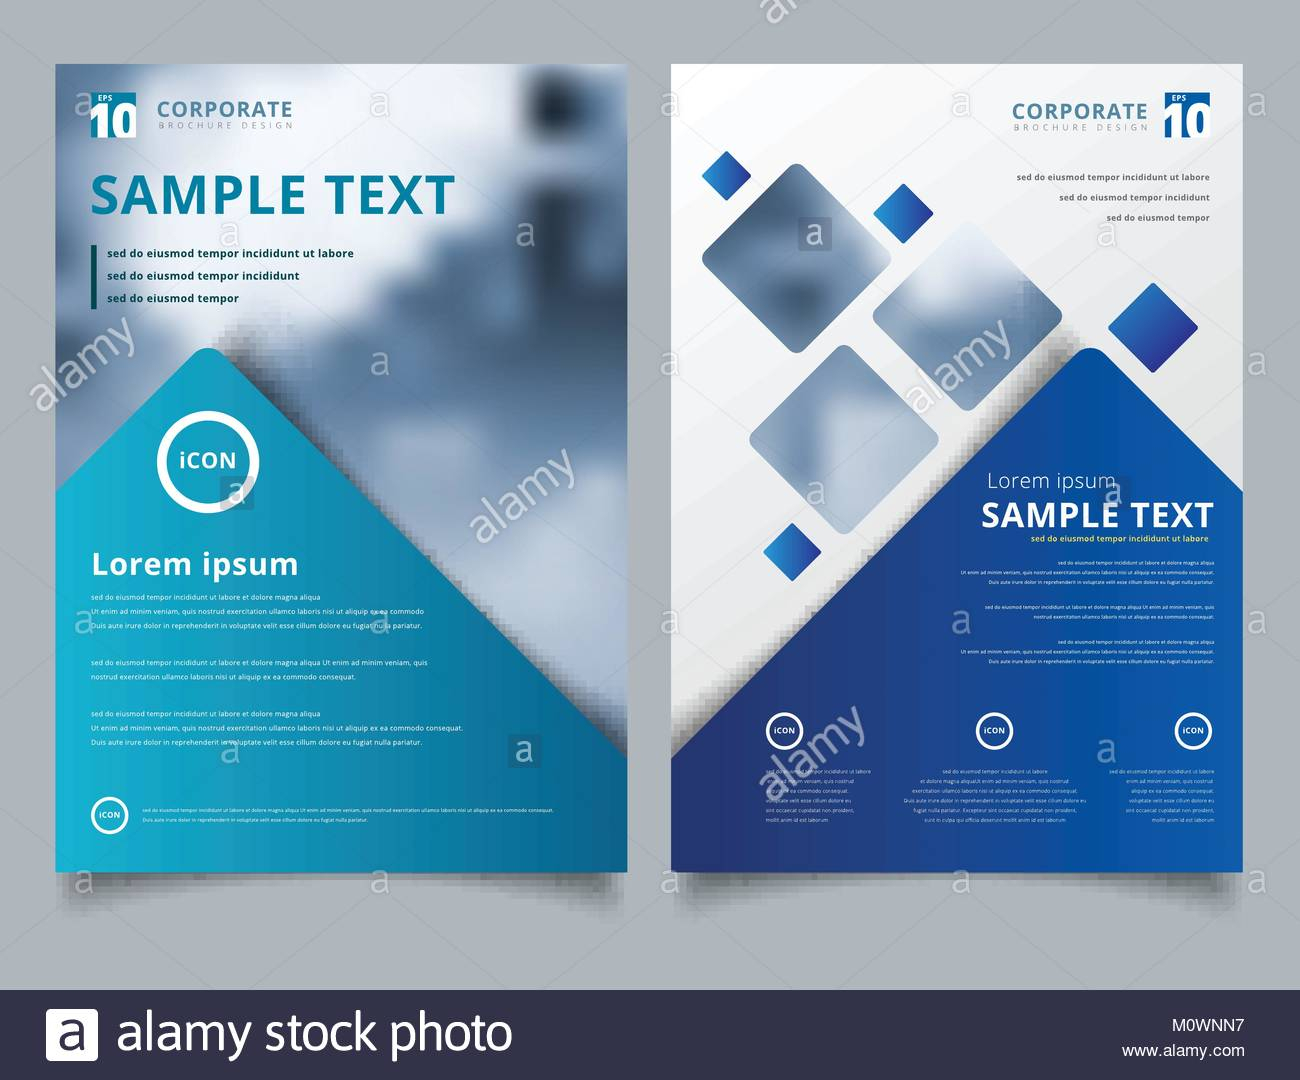 Free Poster Design Templates Illustrator With Scientific Inside Brochure Template Illustrator Free Download